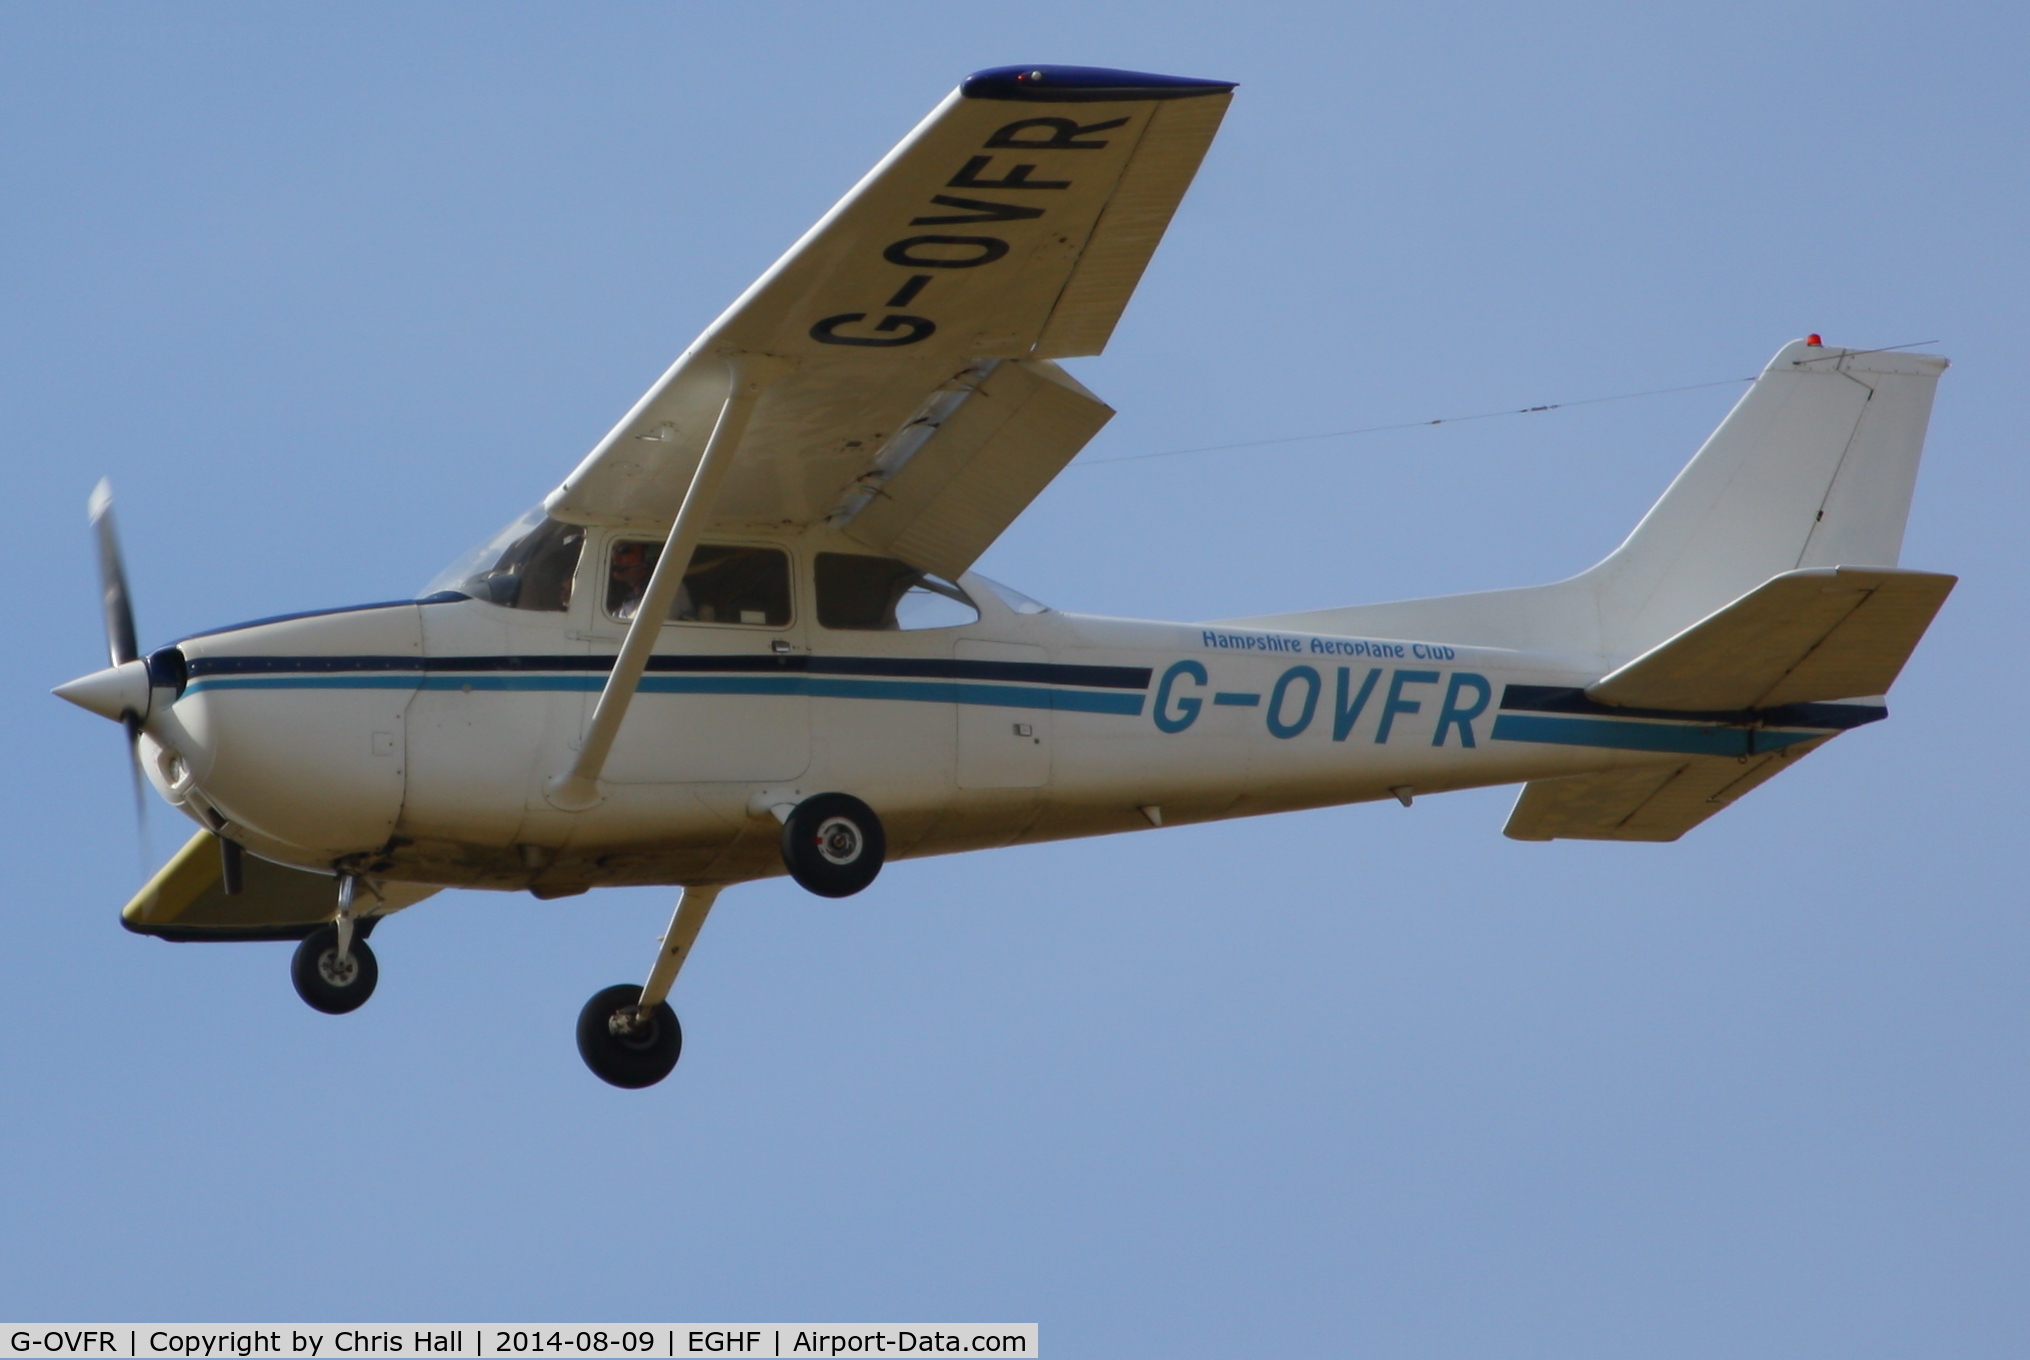 G-OVFR, 1979 Reims F172N Skyhawk C/N 1892, at Lee on Solent